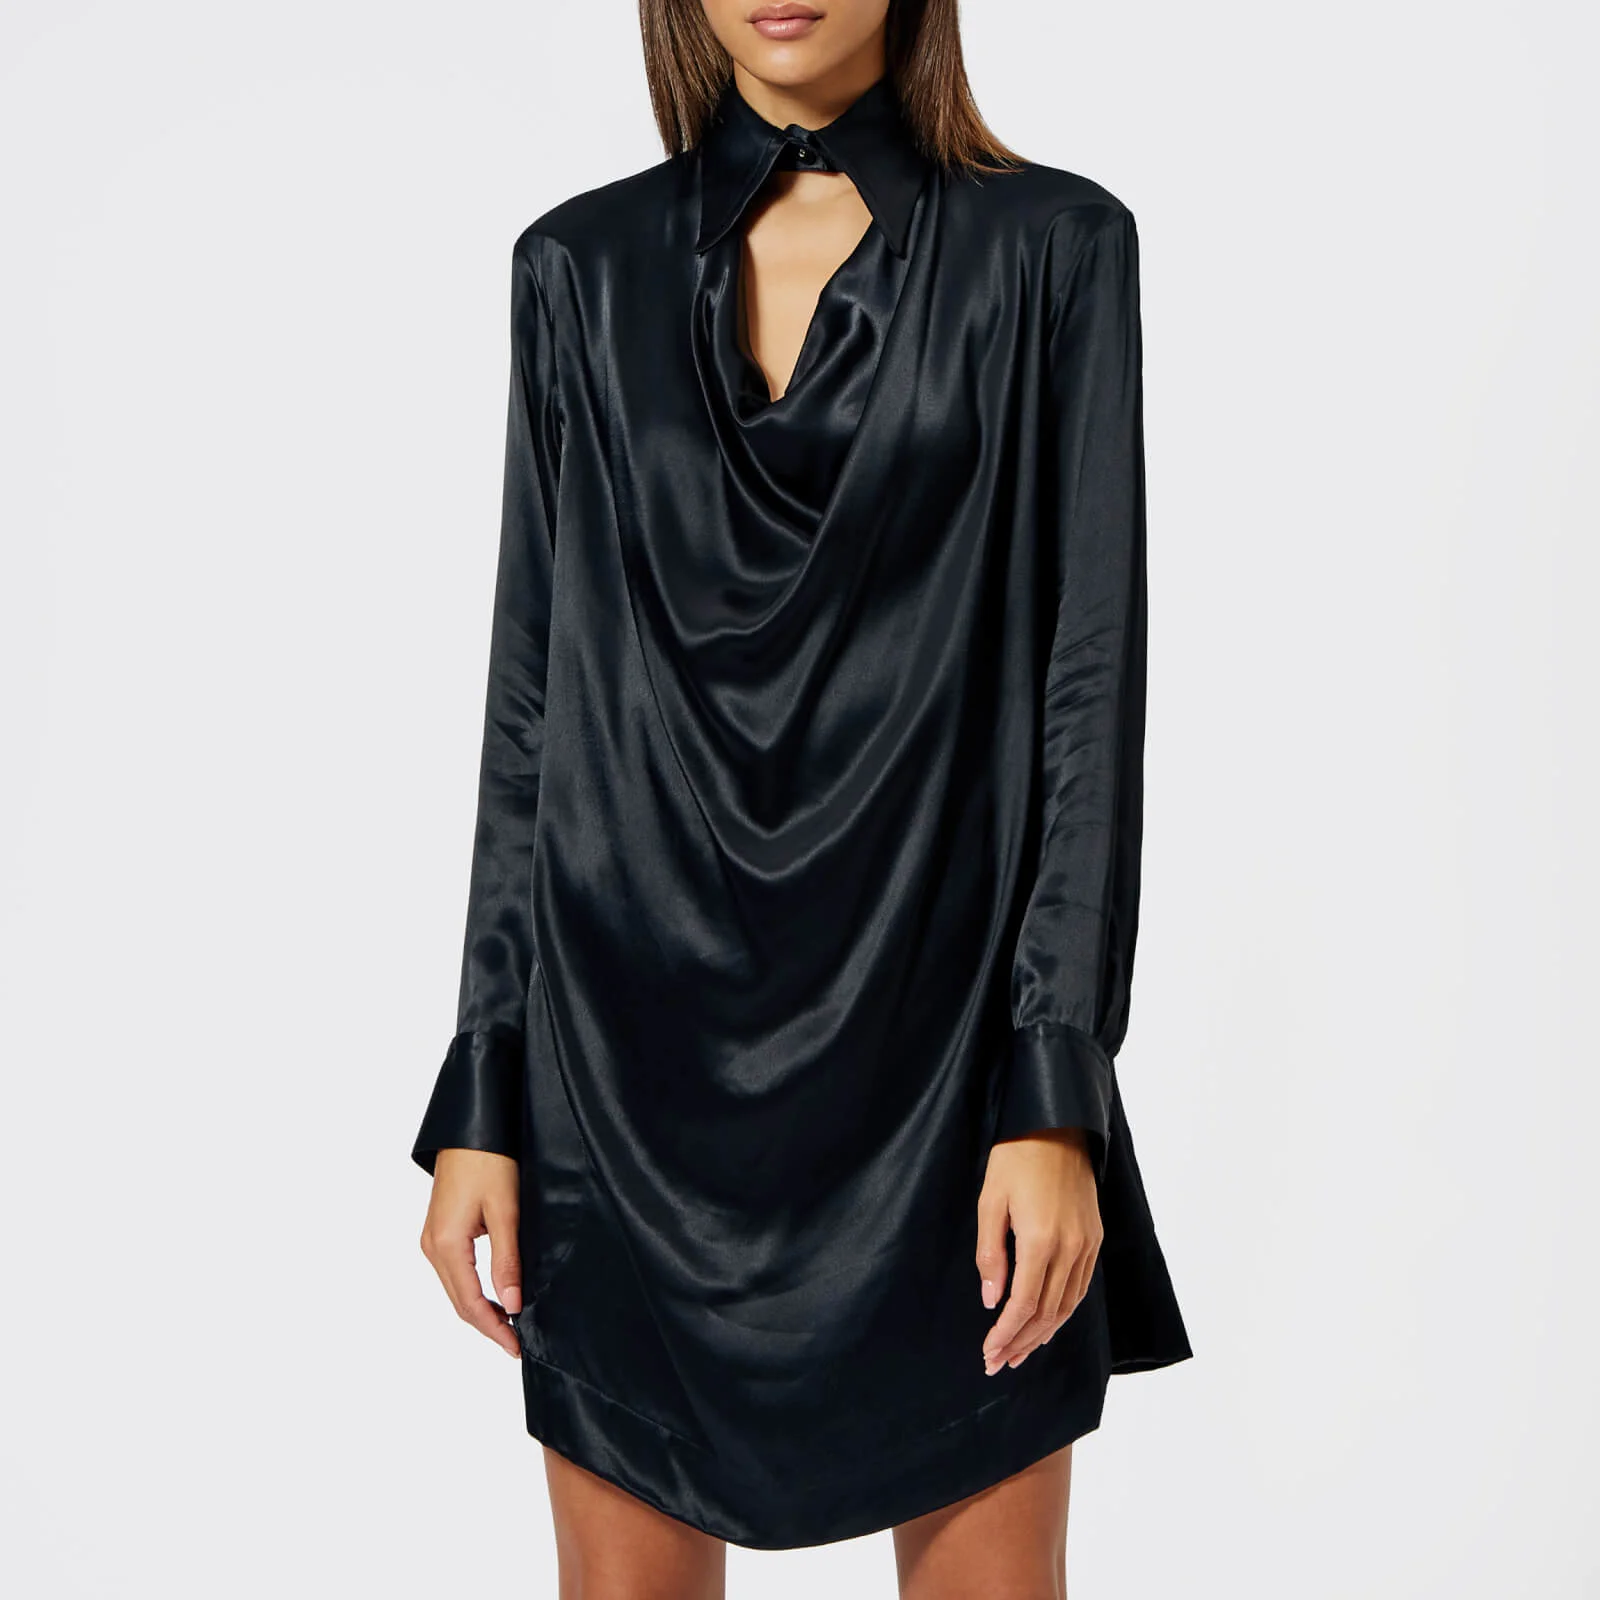 Vivienne Westwood Anglomania Women's New Tondo Dress - Black Image 1